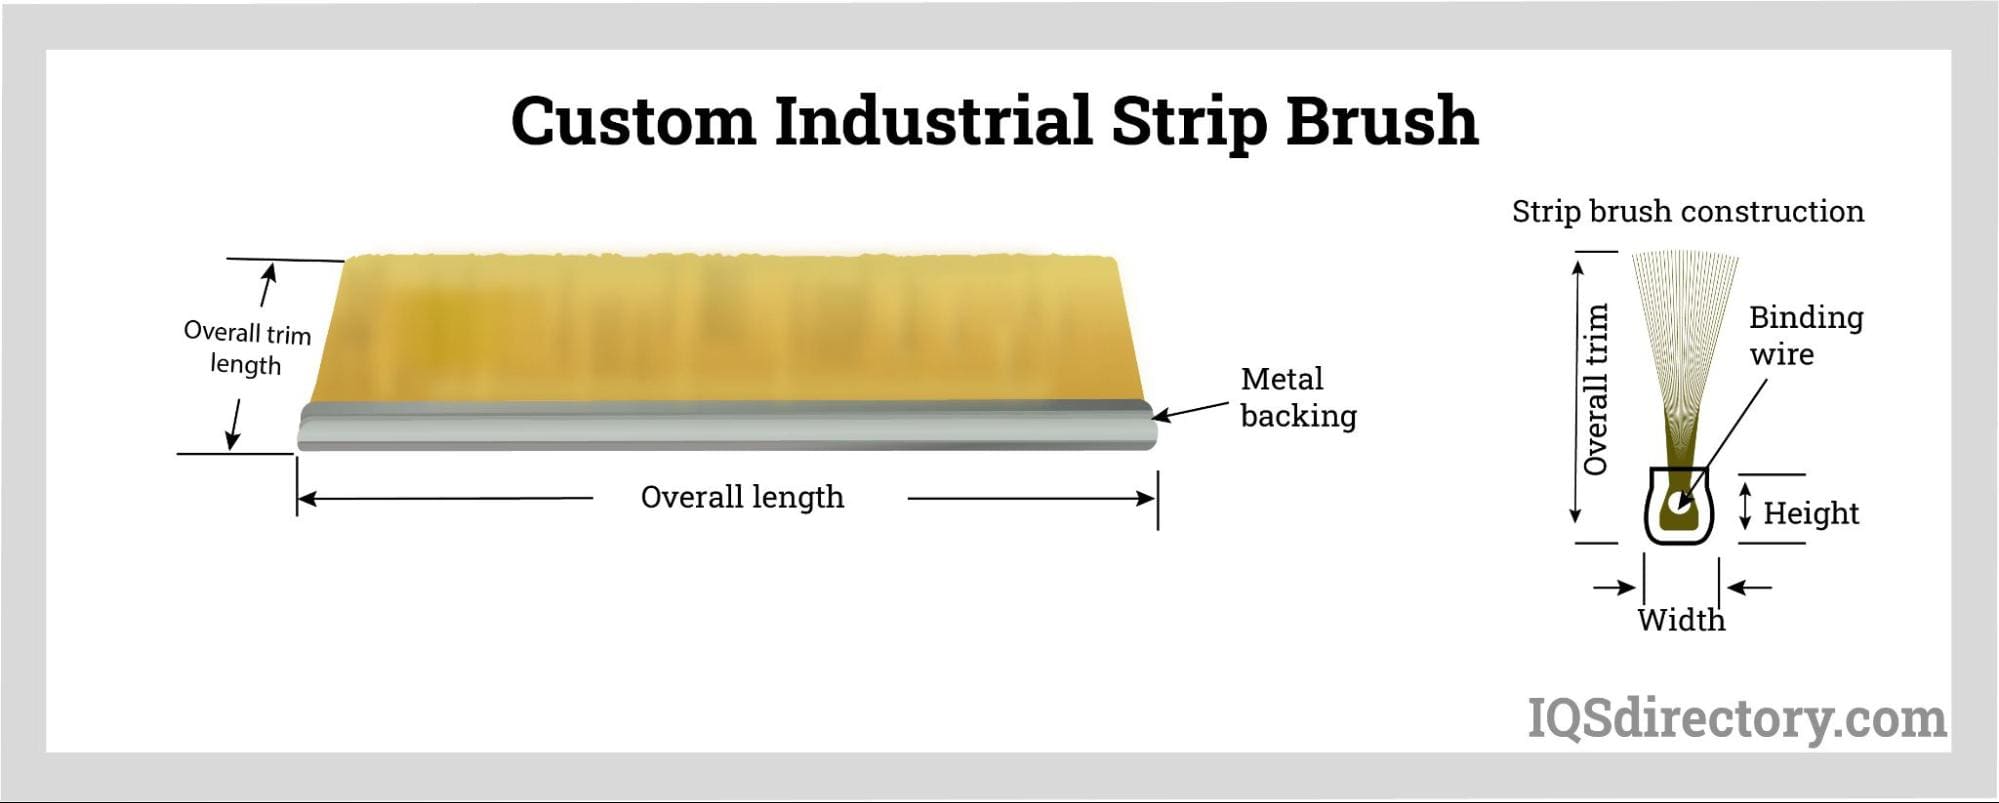 Custom Industrial Strip Brush